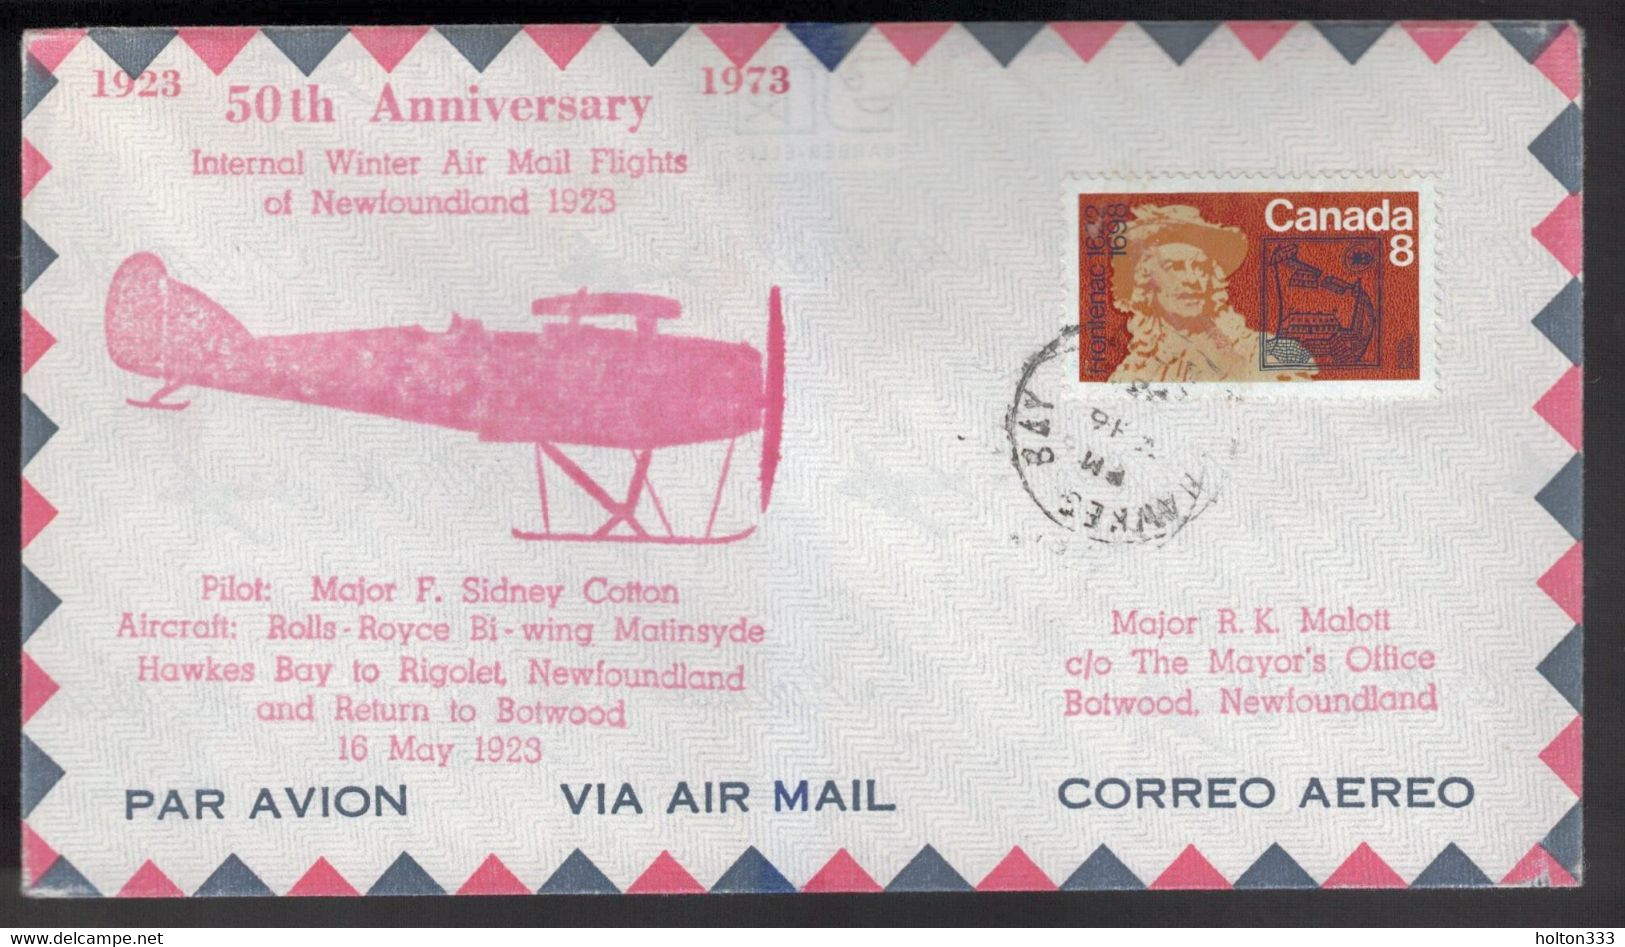 CANADA 50th Anniversary -  NL Flight Hawkes Bay-Rigolet-Botwood May 16, 1923 3 - Enveloppes Commémoratives